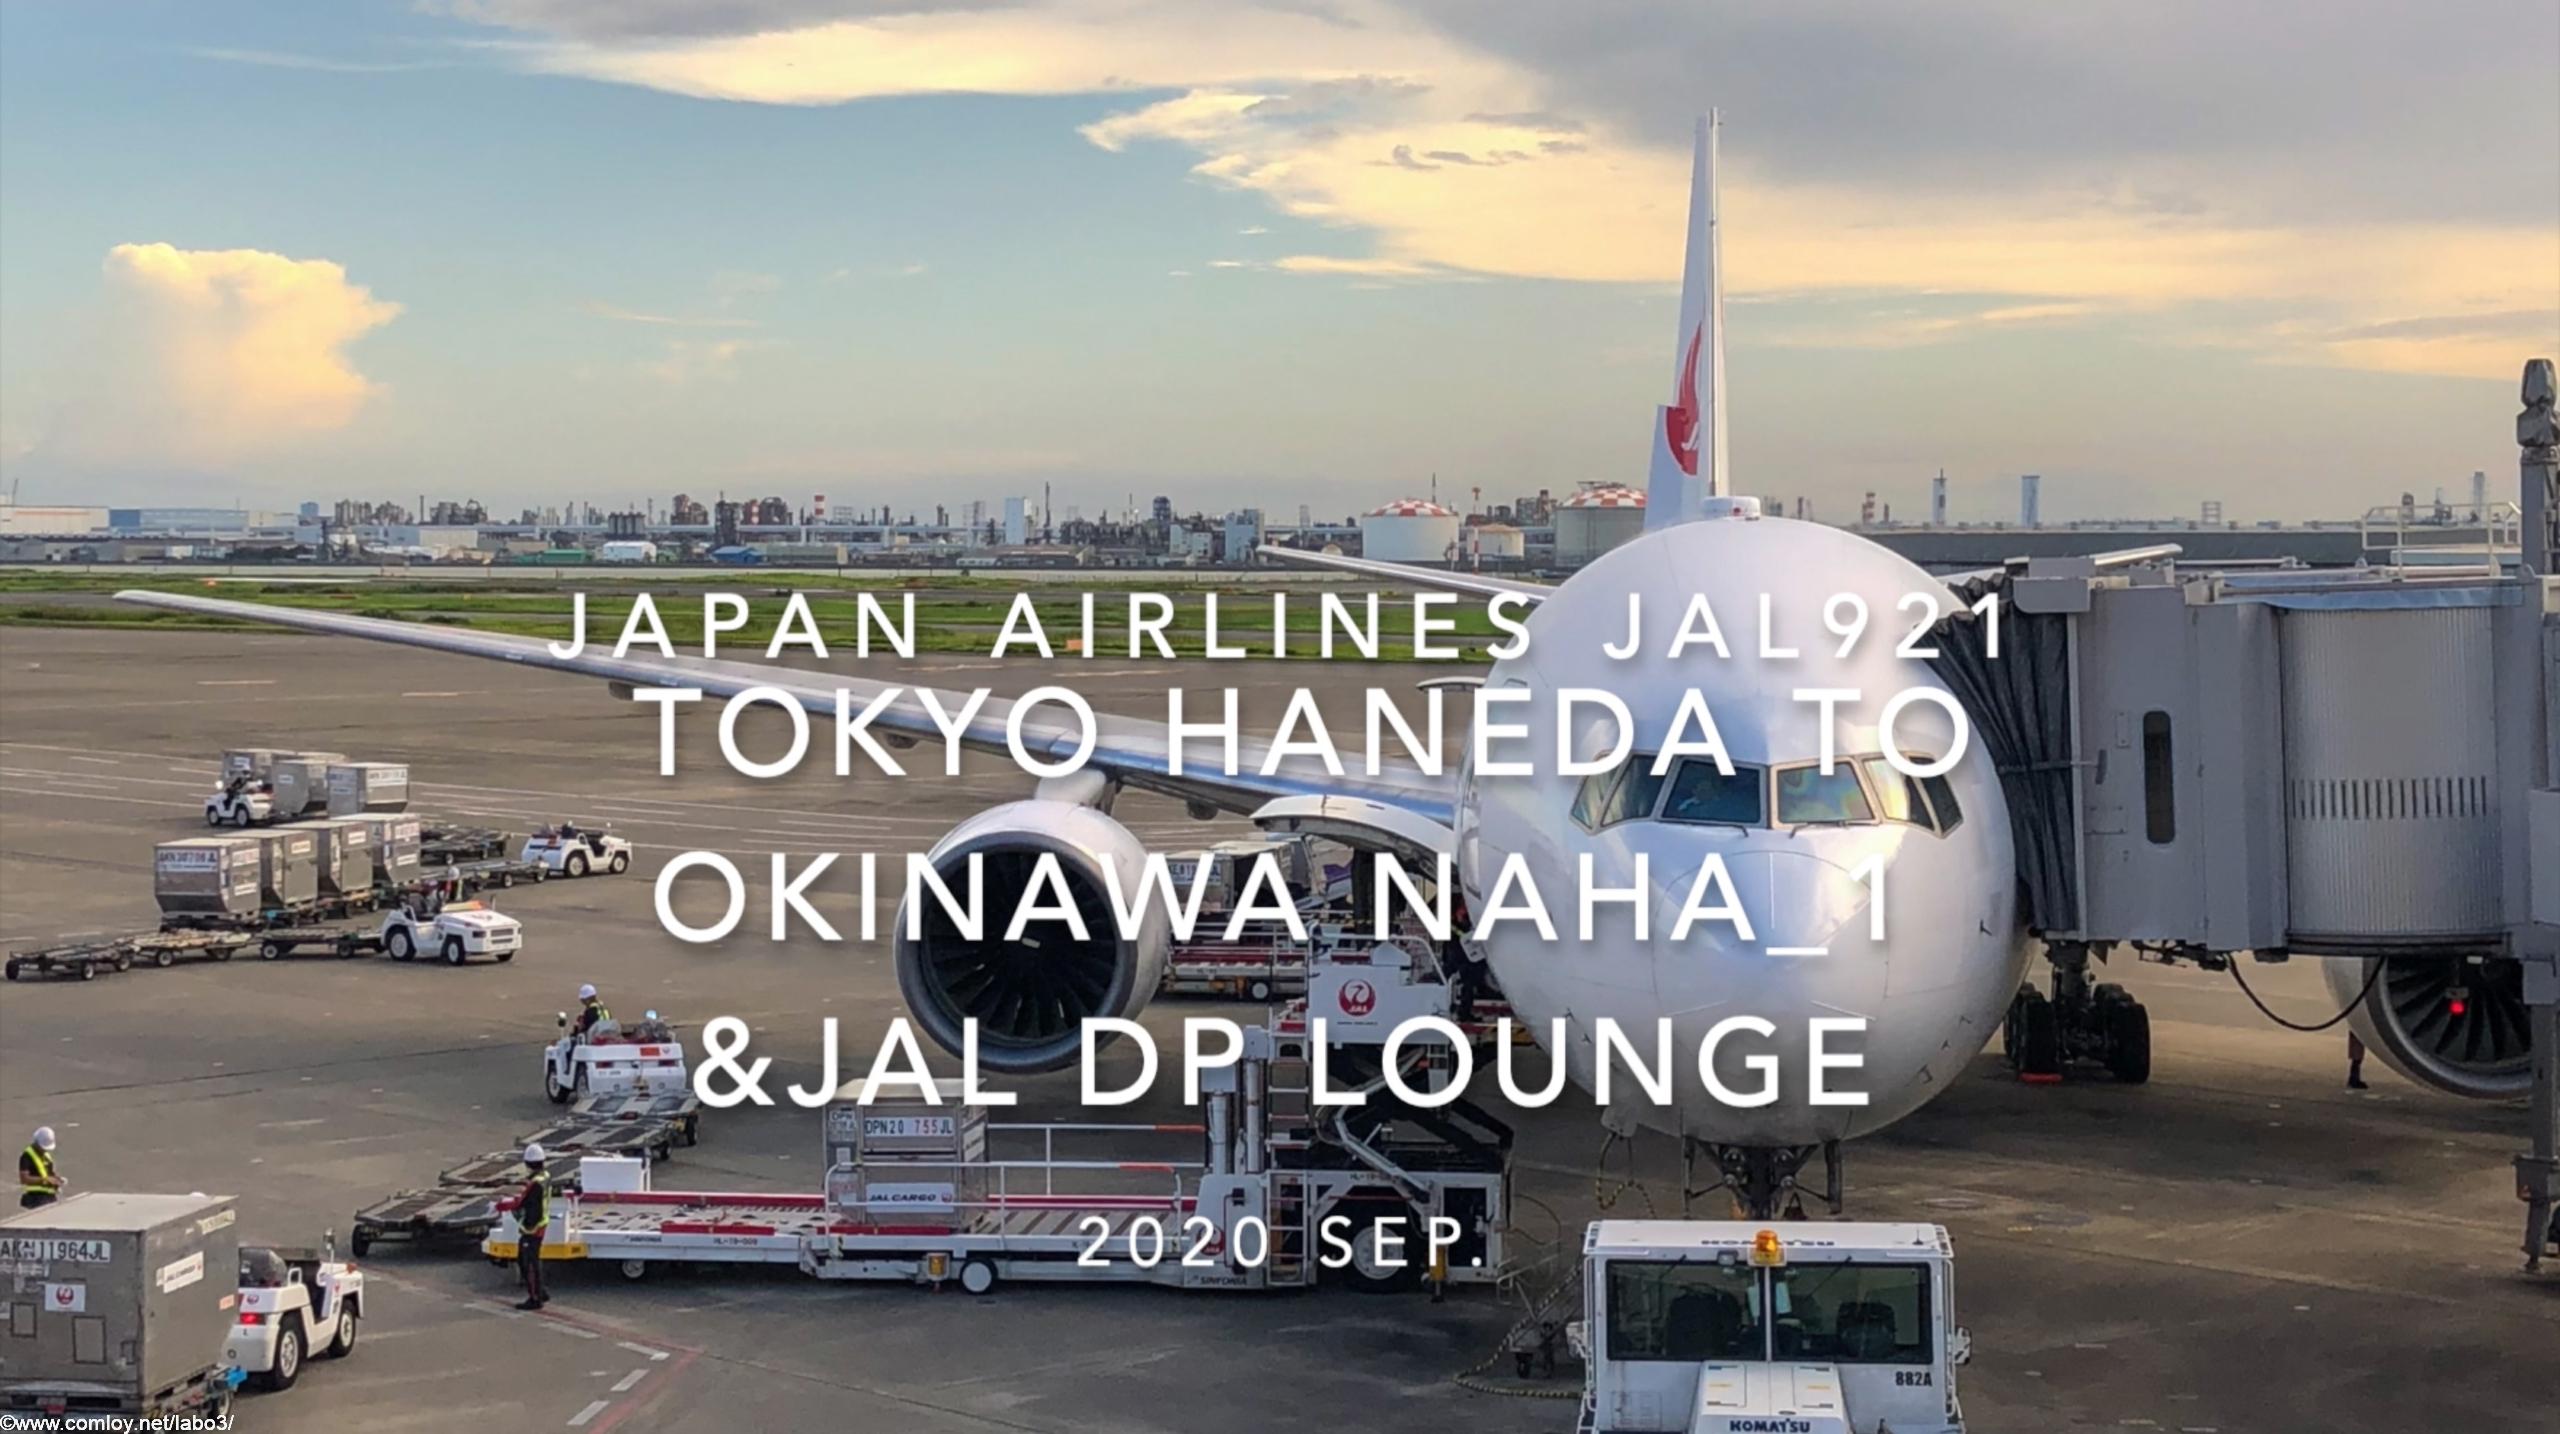 【Flight Report】2020 Sep Japan Airlines JAL921 HANEDA TO OKINAWA NAHA_1 日本航空 羽田 - 那覇 搭乗記